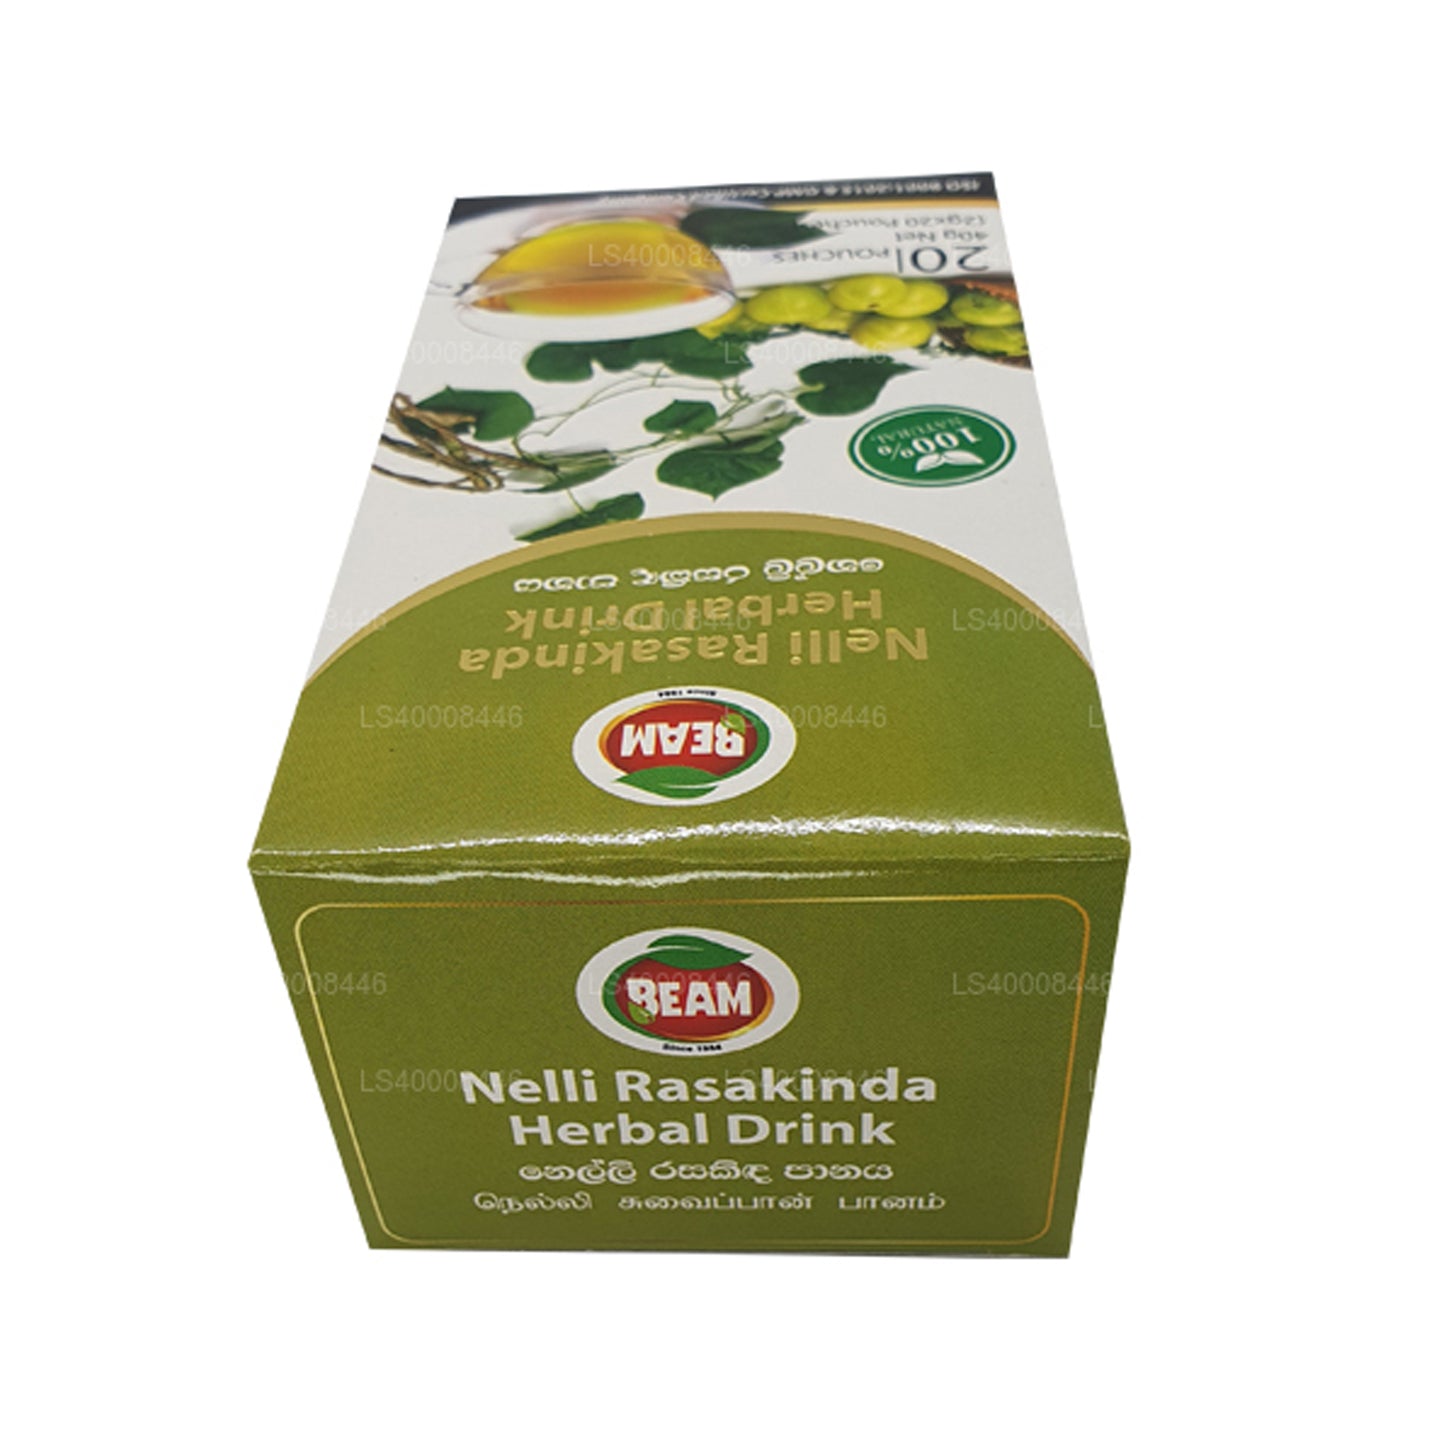 Beam Nelli Rasakinda 草本饮料 (40g) 20 个茶包